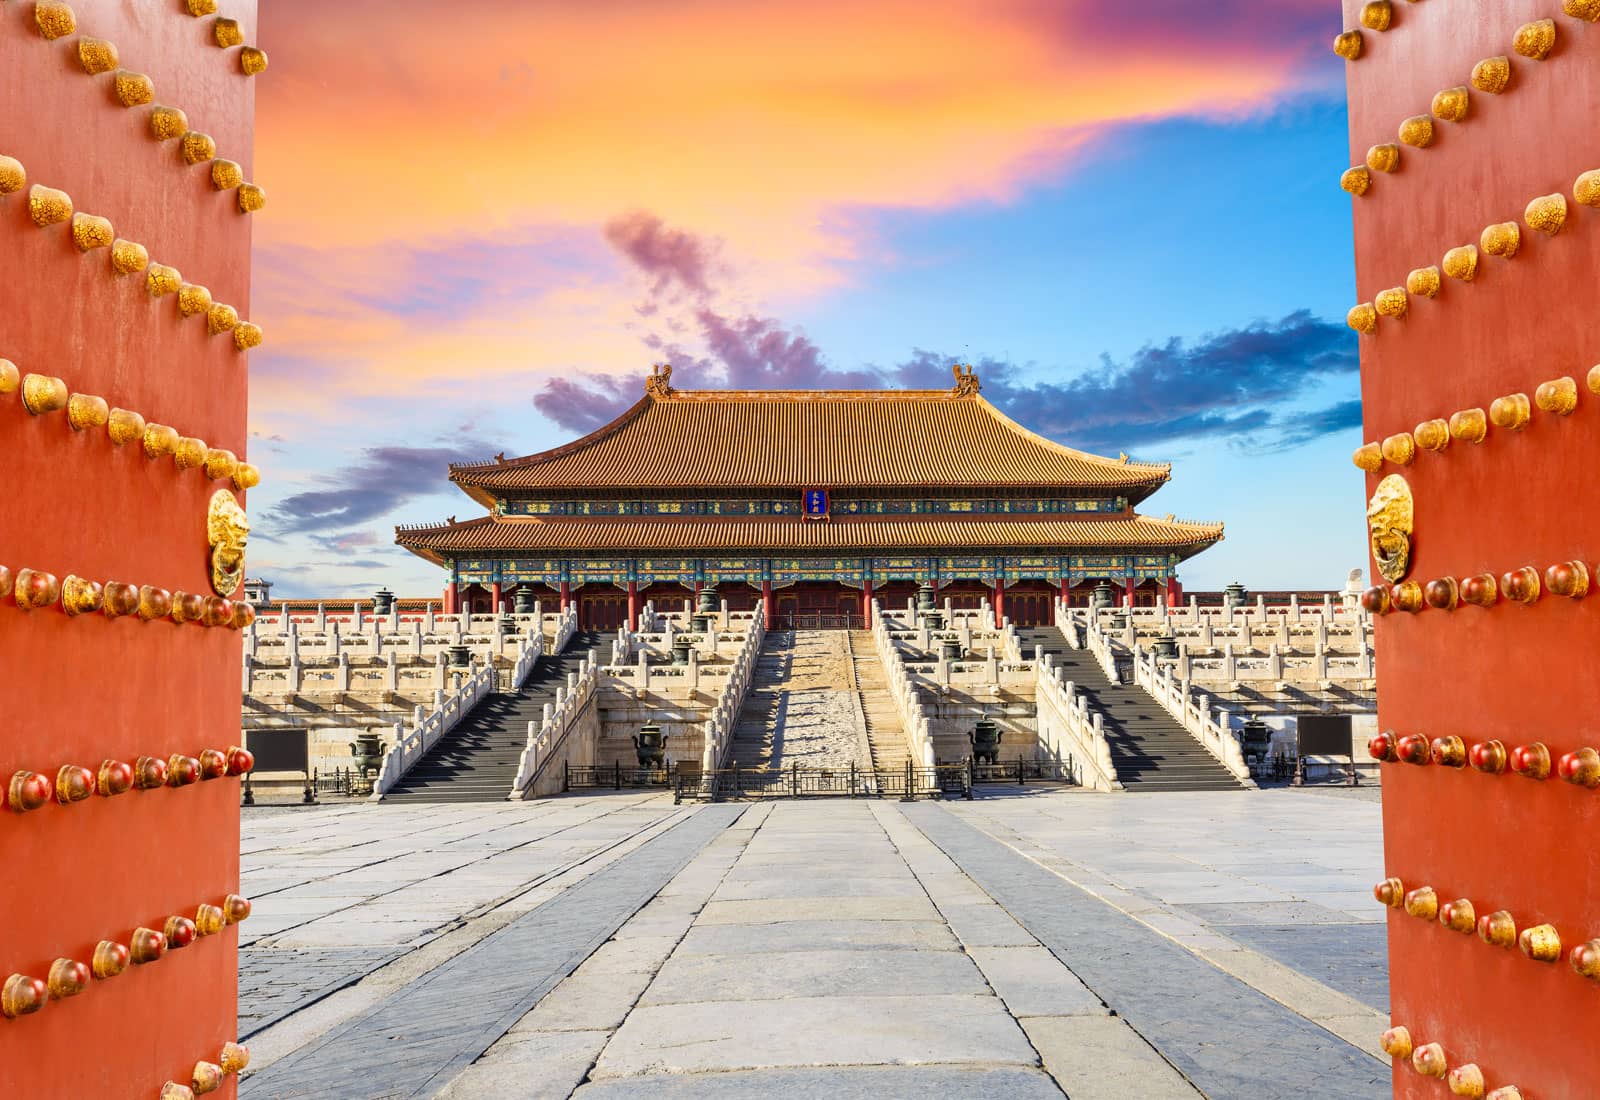 Image of forbidden City